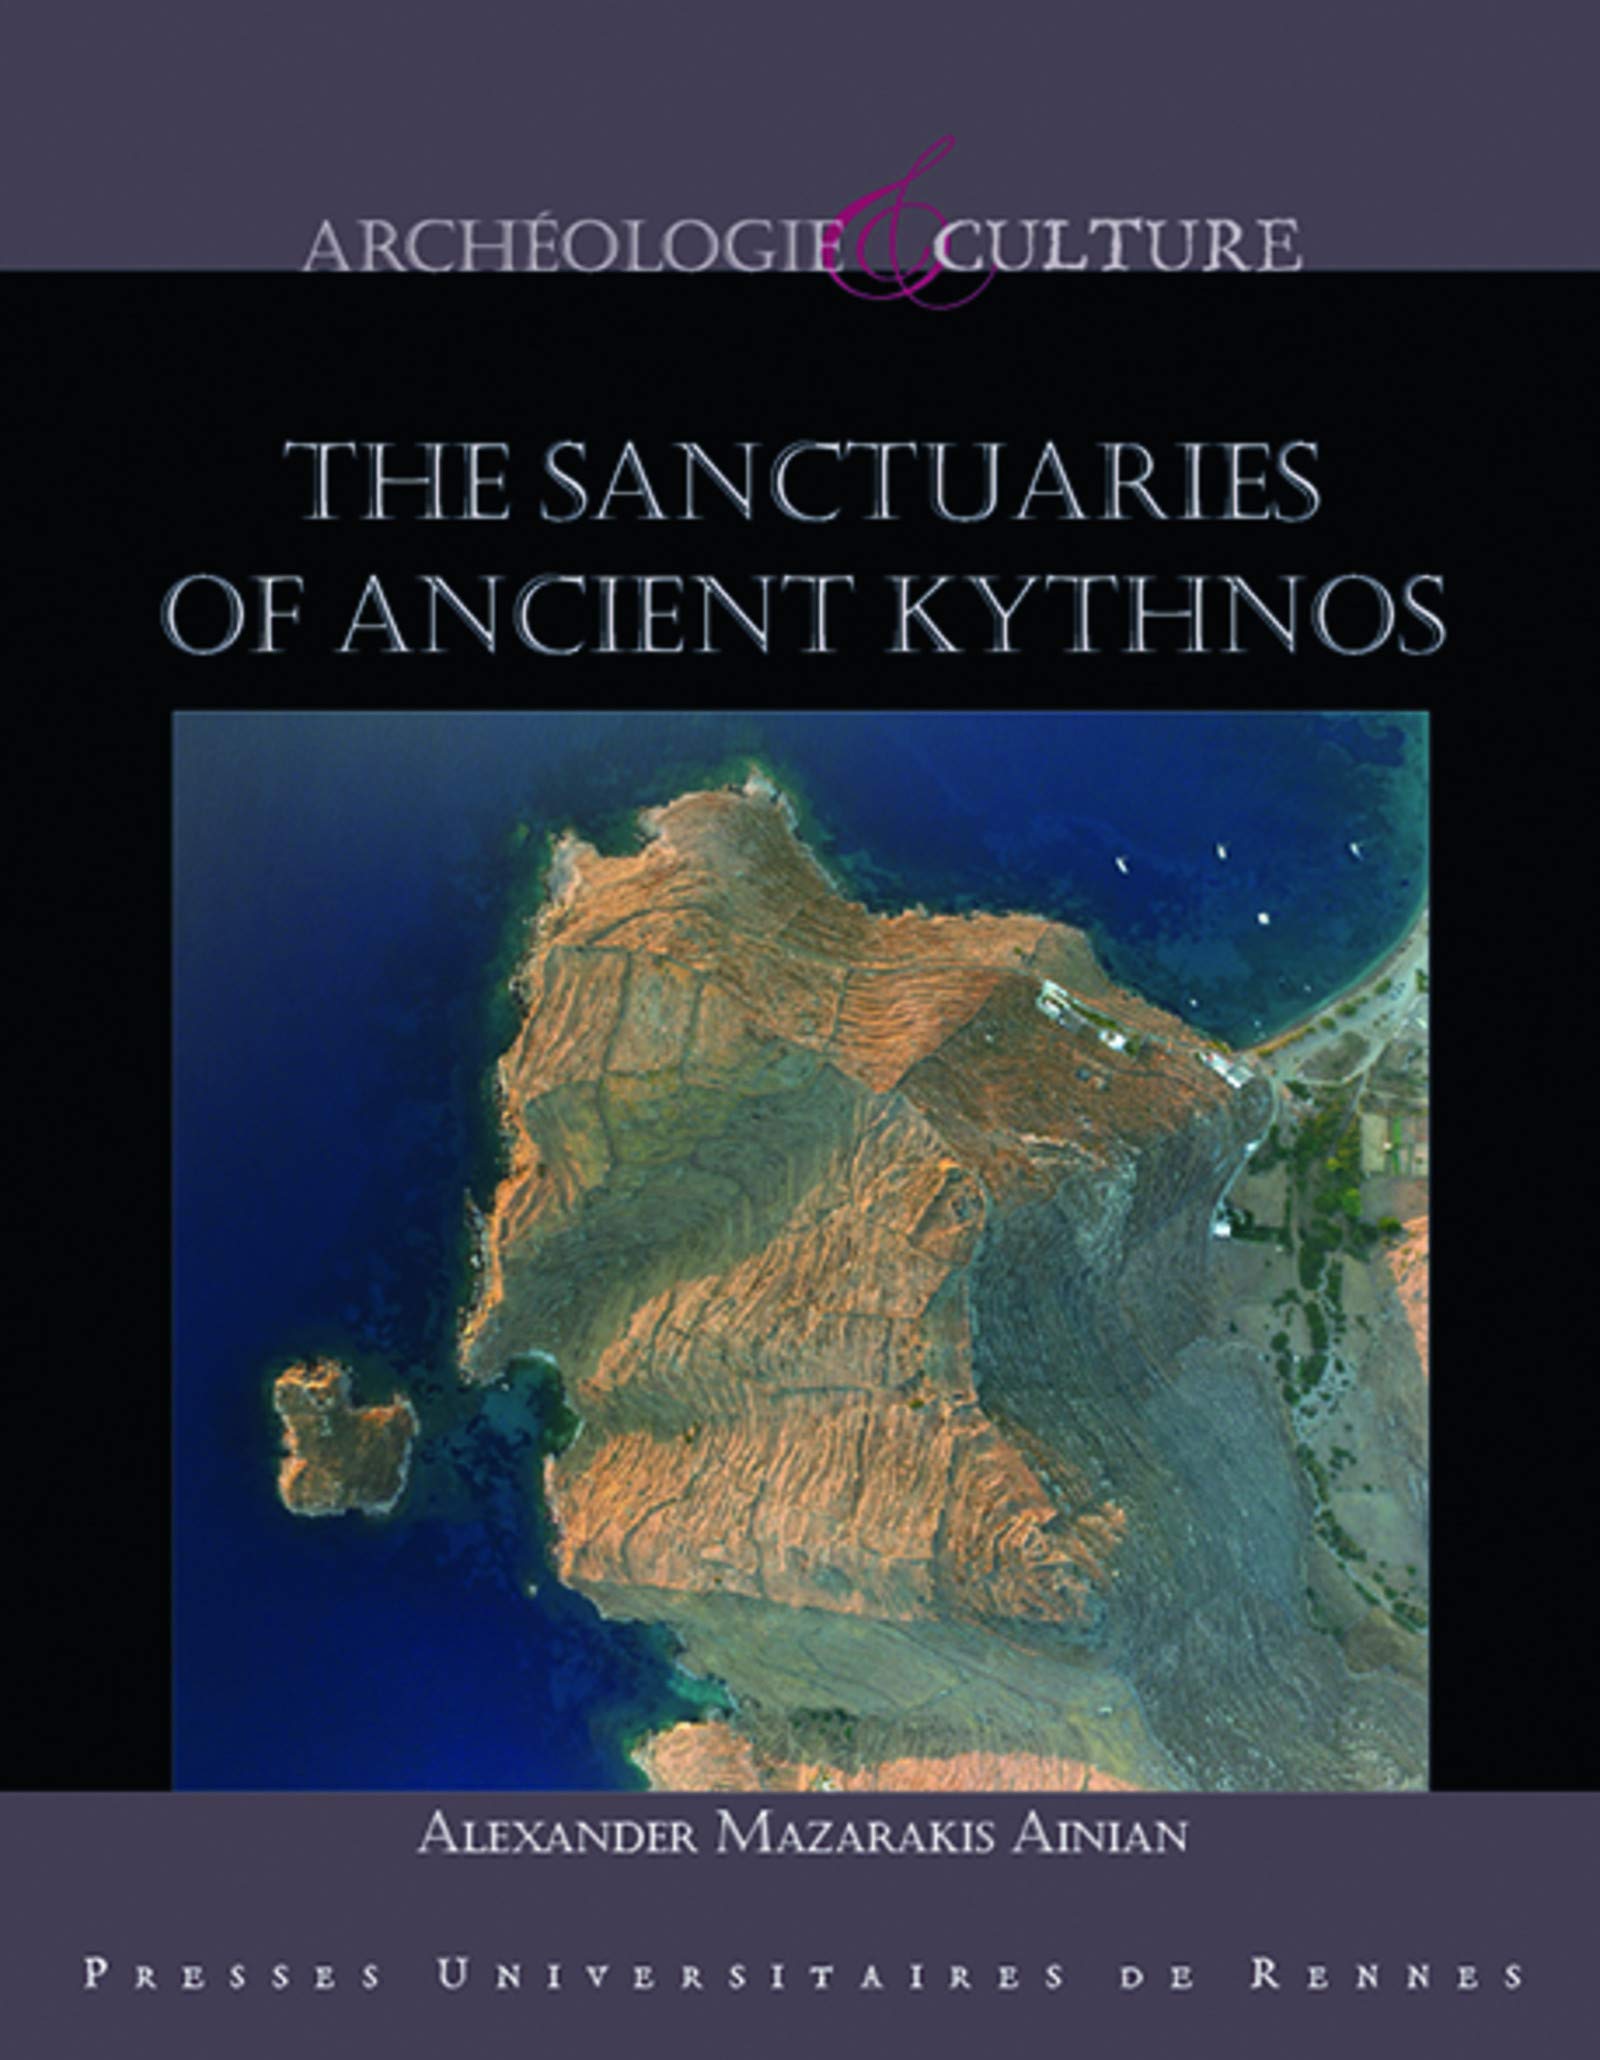 The sanctuaries of ancient Kythnos, 2019, 156 p.